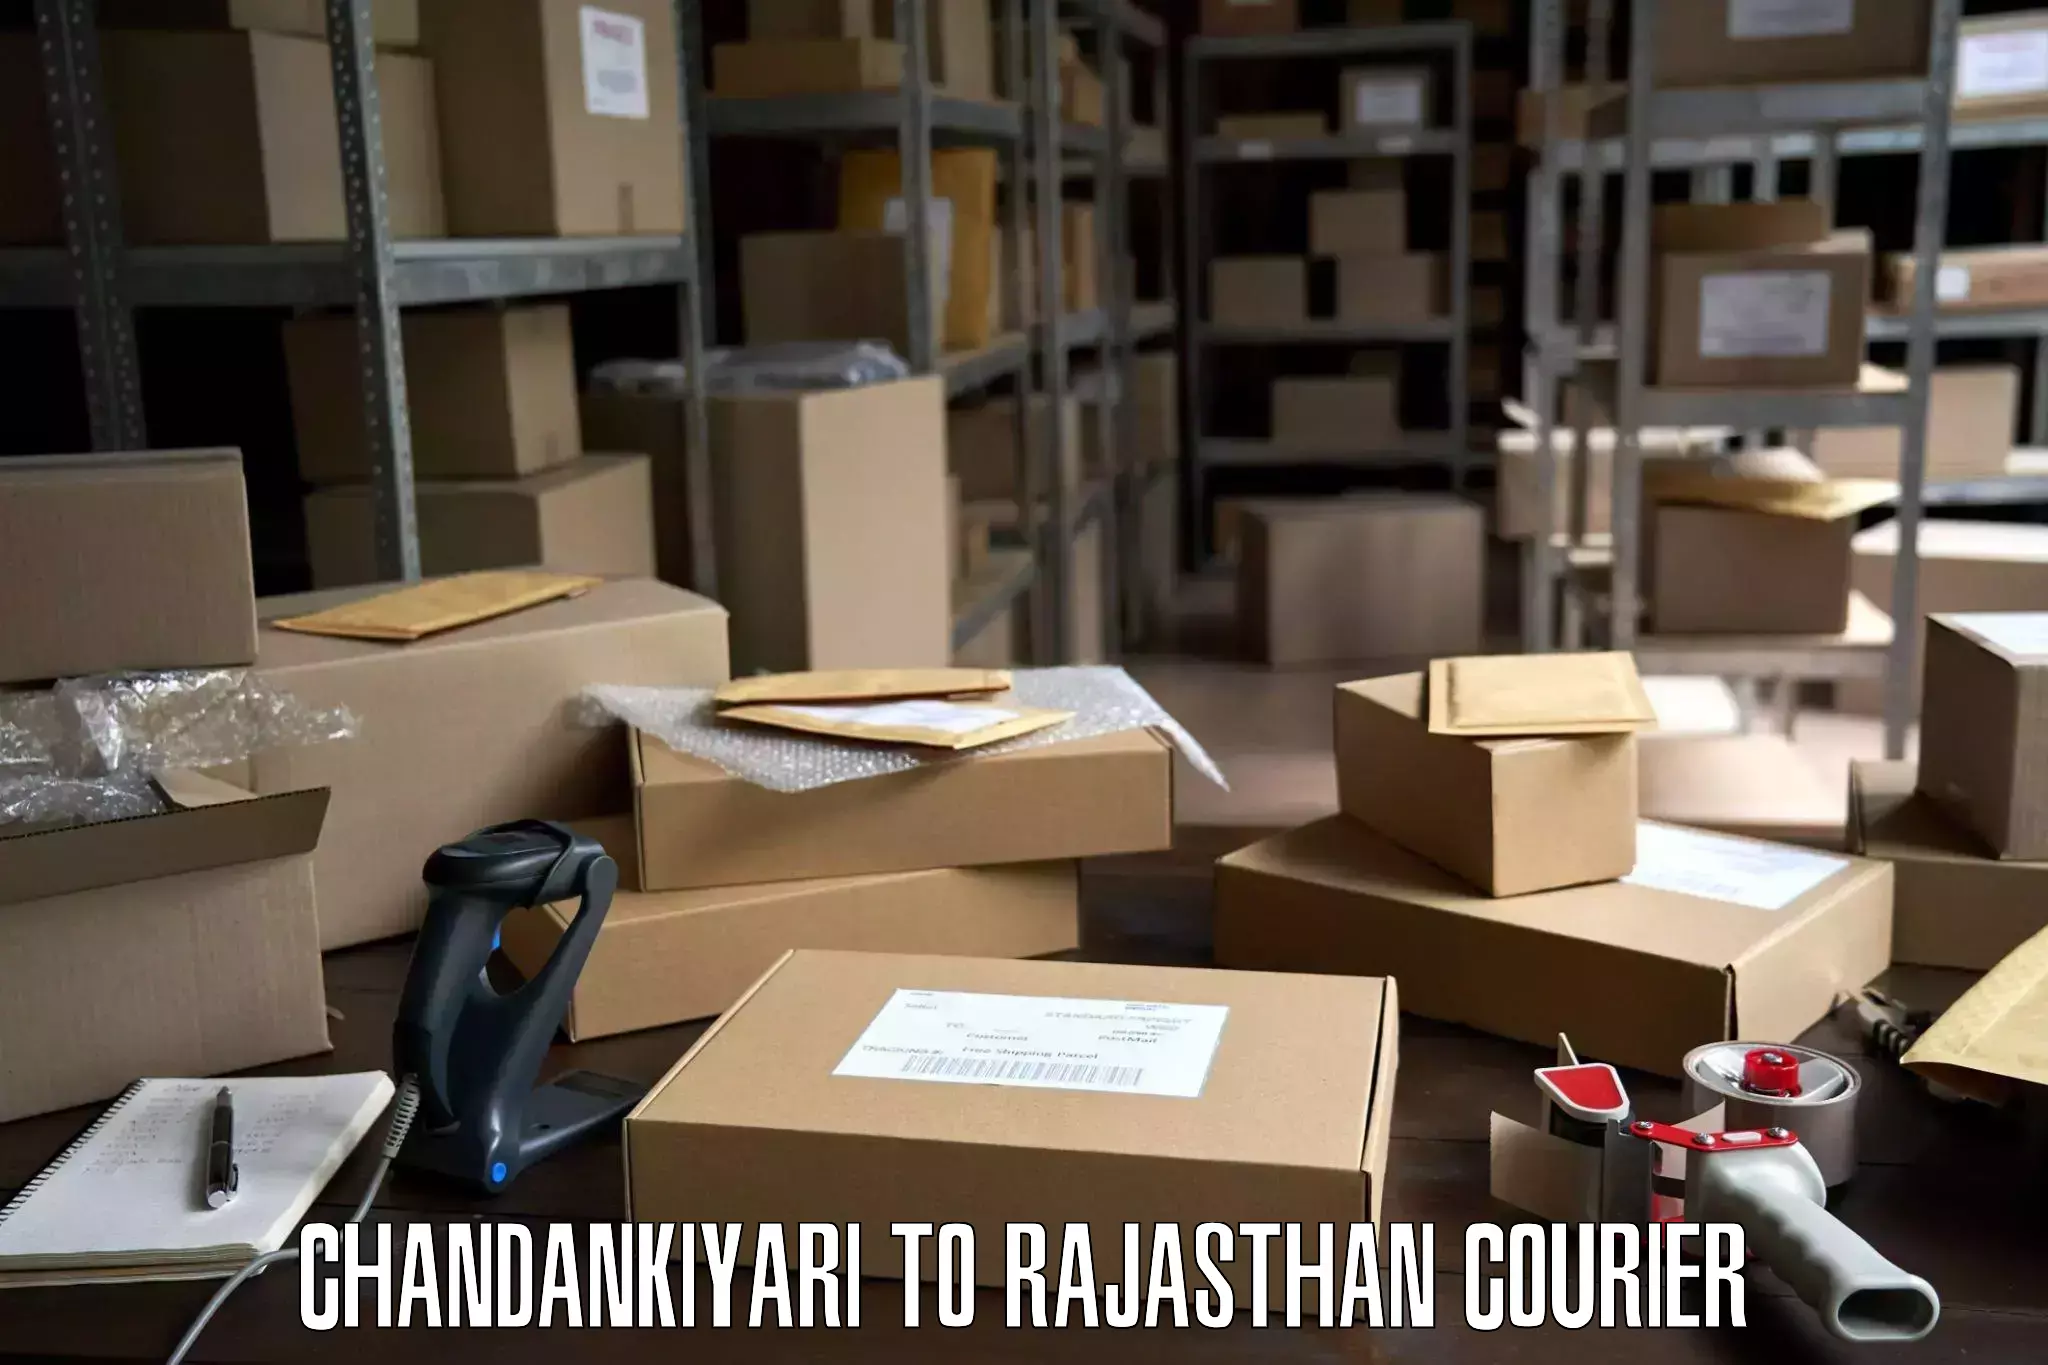 Moving and packing experts Chandankiyari to Bhinder